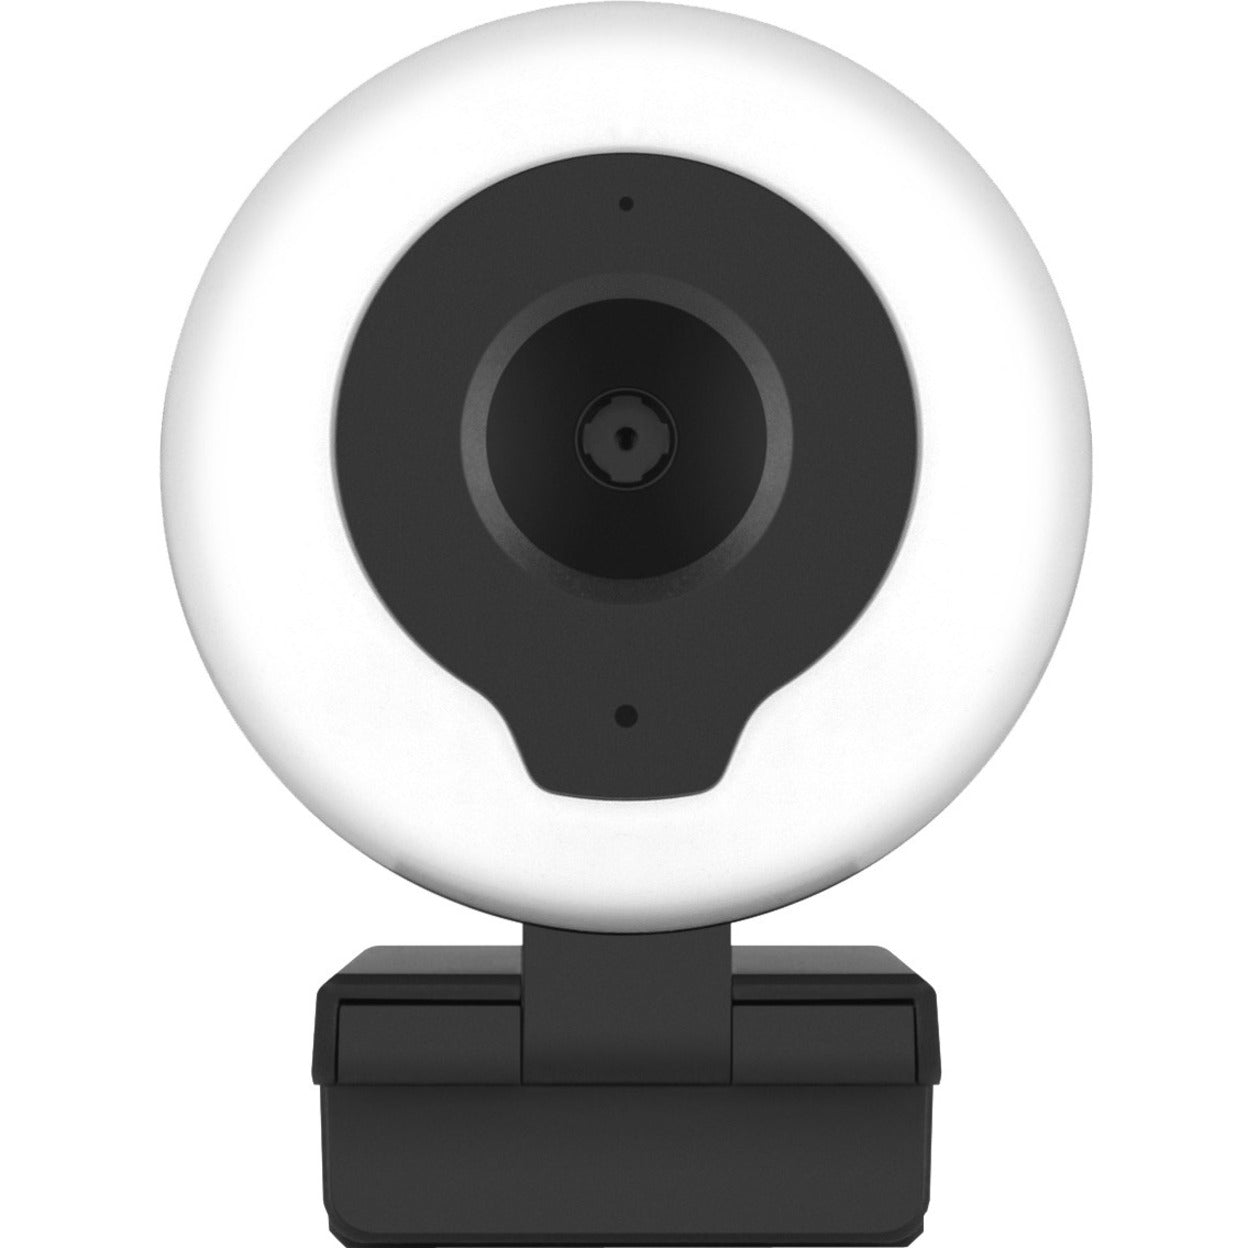 Aluratek AWCL2KFR LIVE 2K HD Ring Light Webcam with Tripod, 5 Megapixel, 30 fps, USB 2.0 Type A